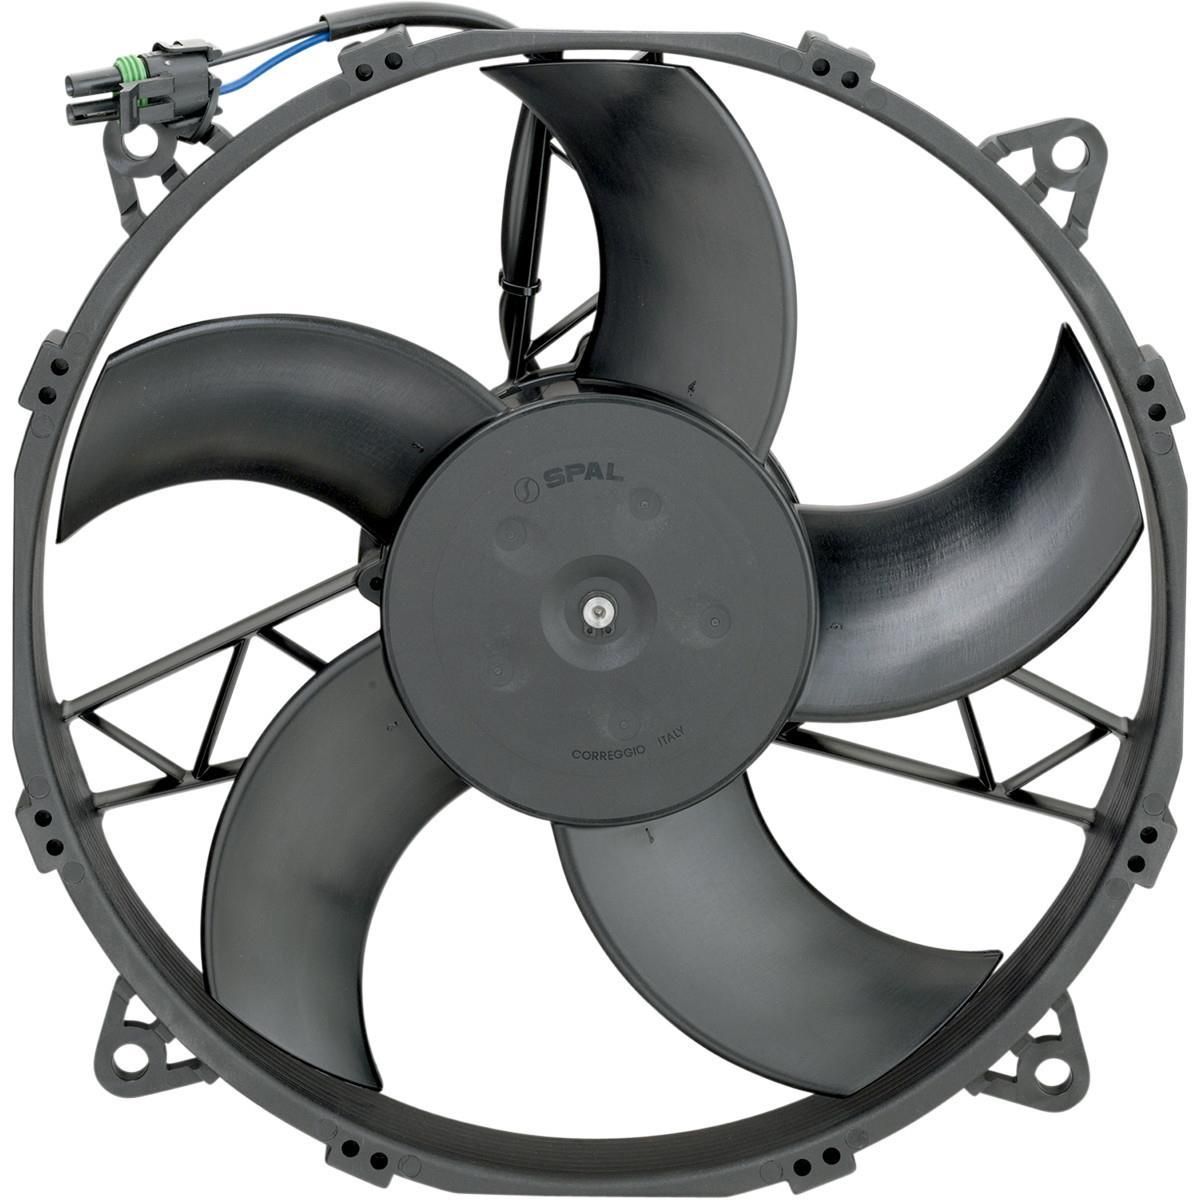 224B-MOOSE-UTILI-19010314 Hi-Performance Cooling Fan